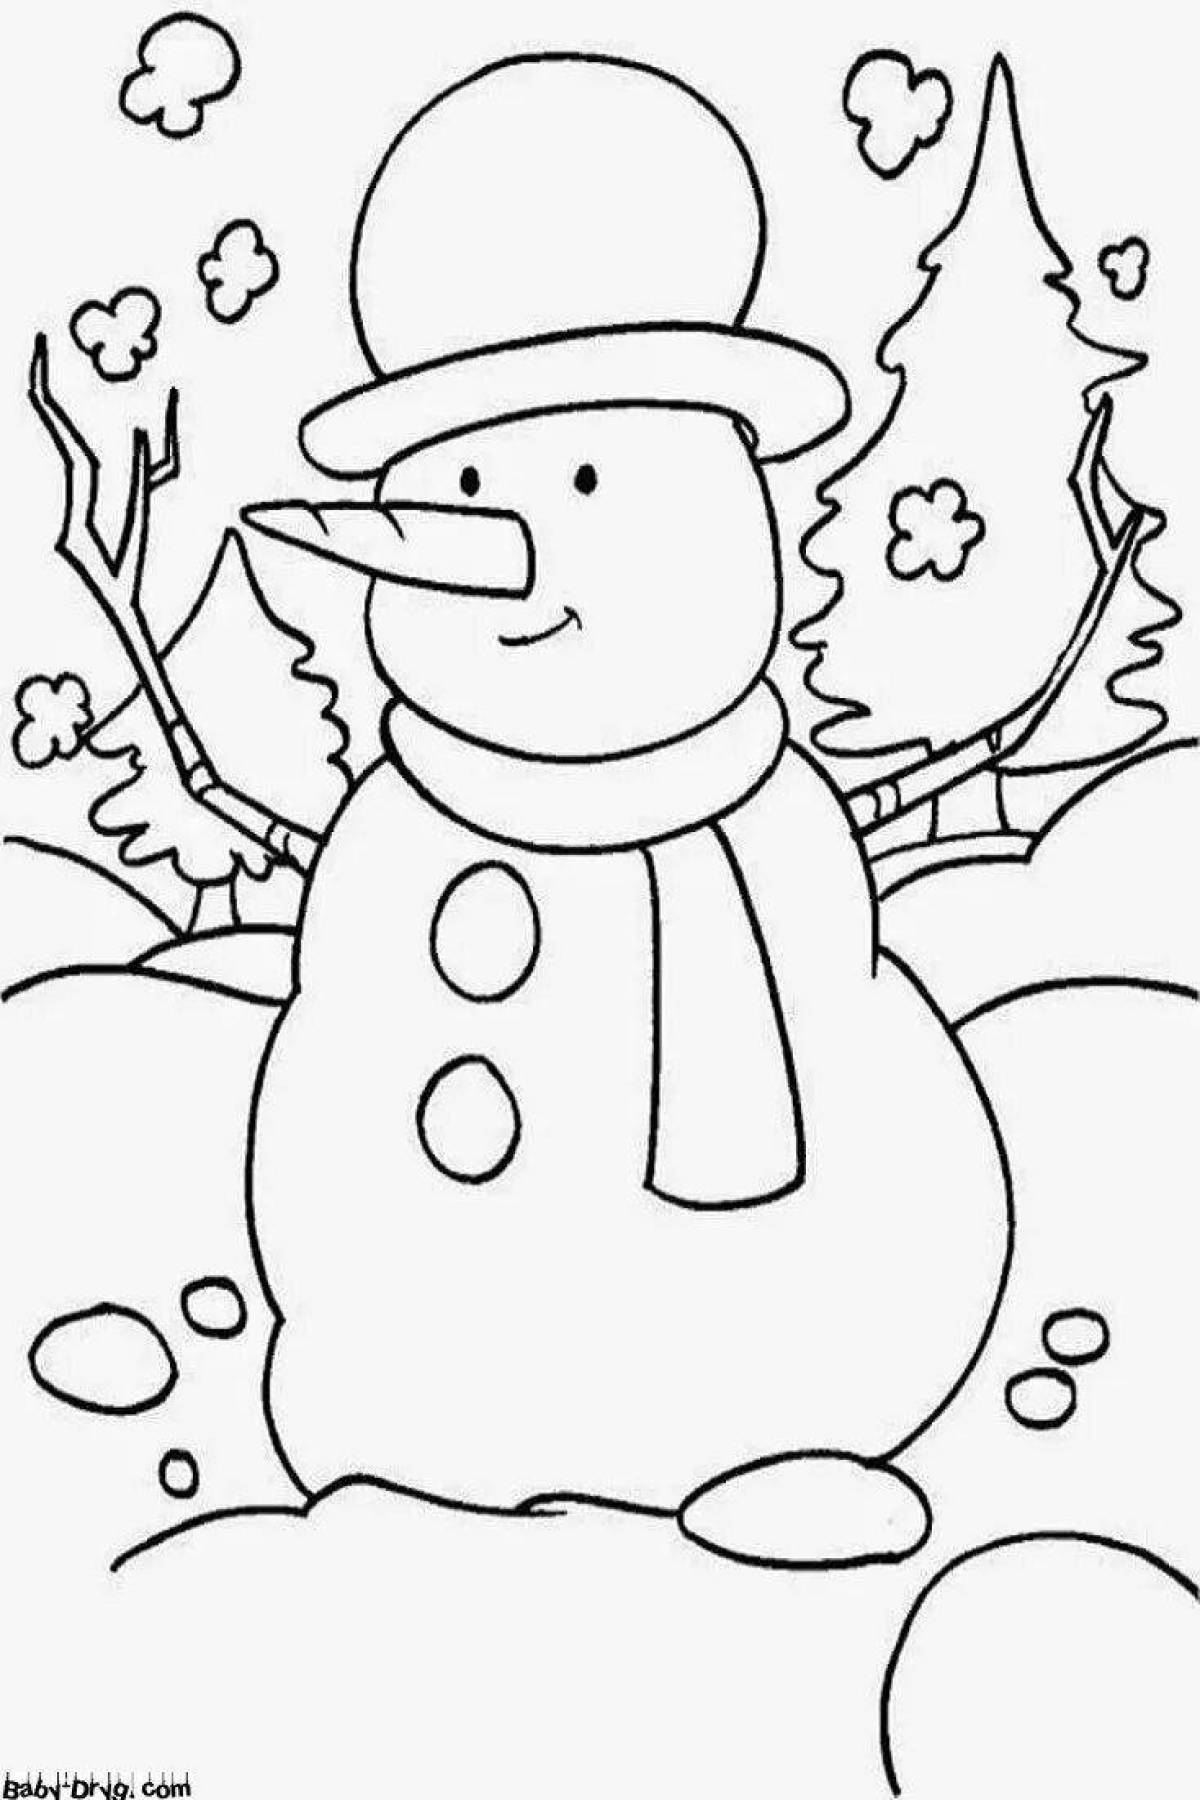 Snowman#5